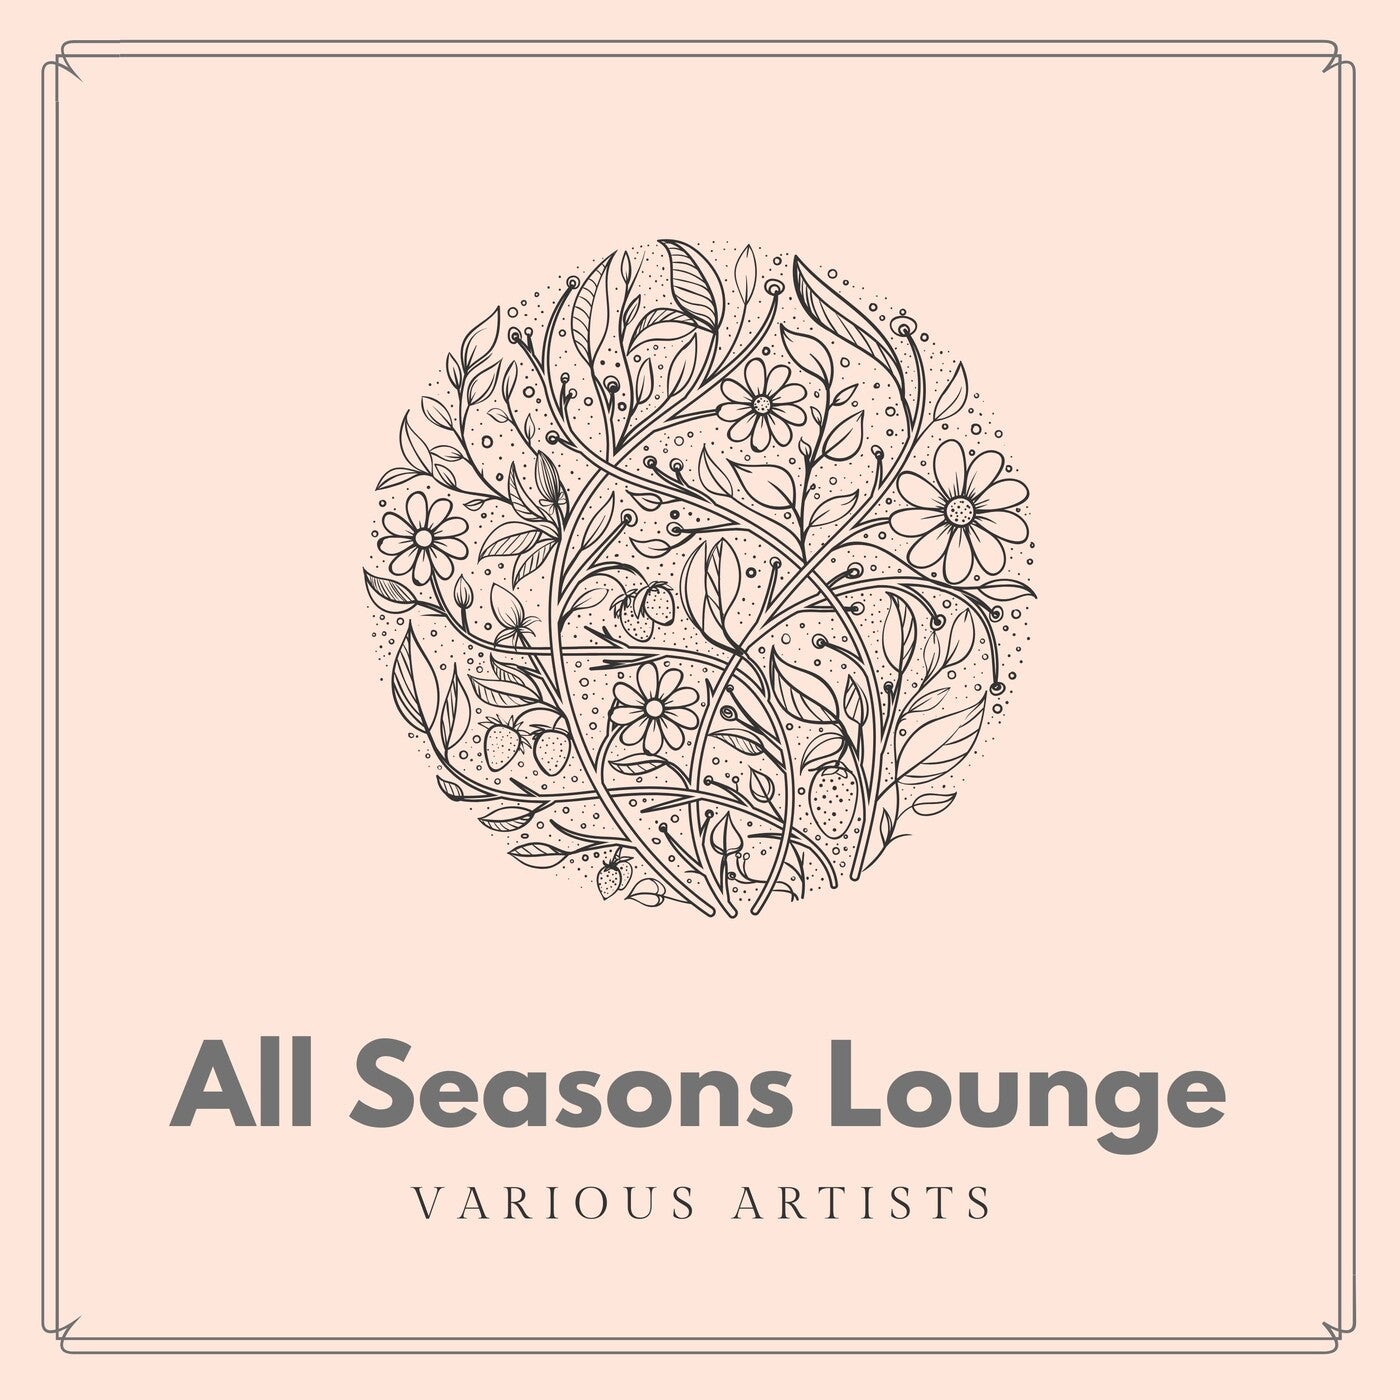 All Seasons Lounge